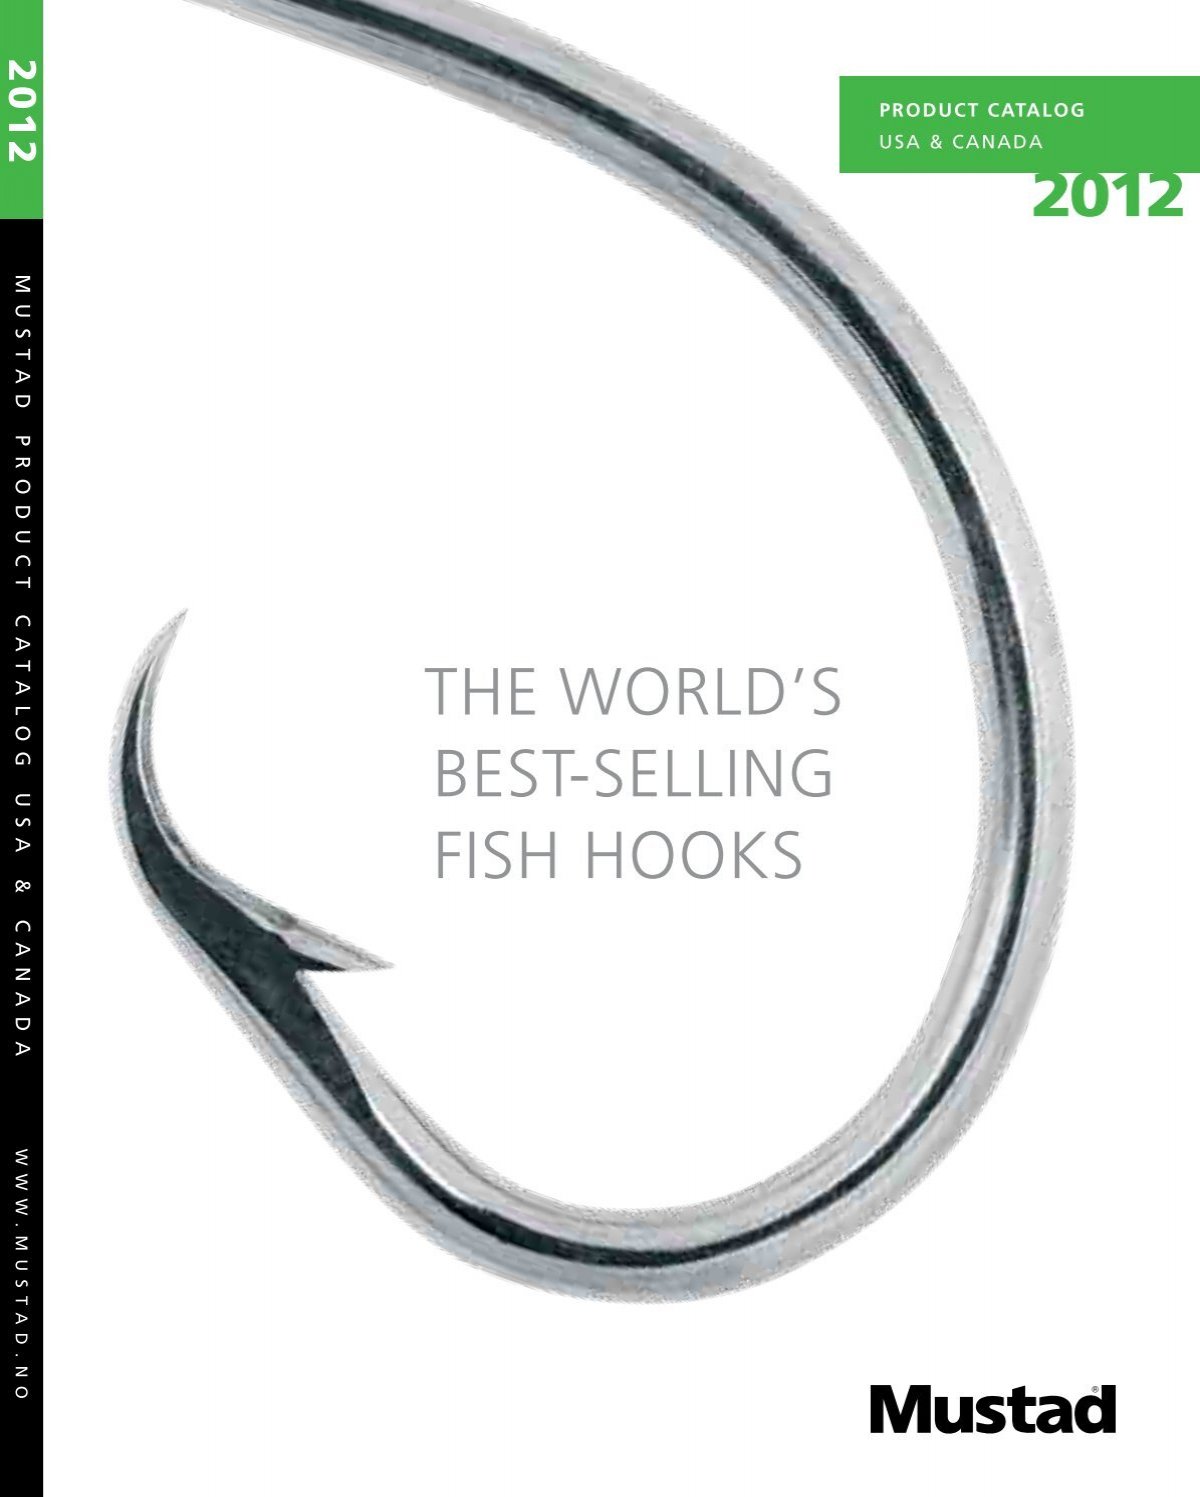 THE WORLD'S BEST-SELLING FISH HOOKS - Mustad